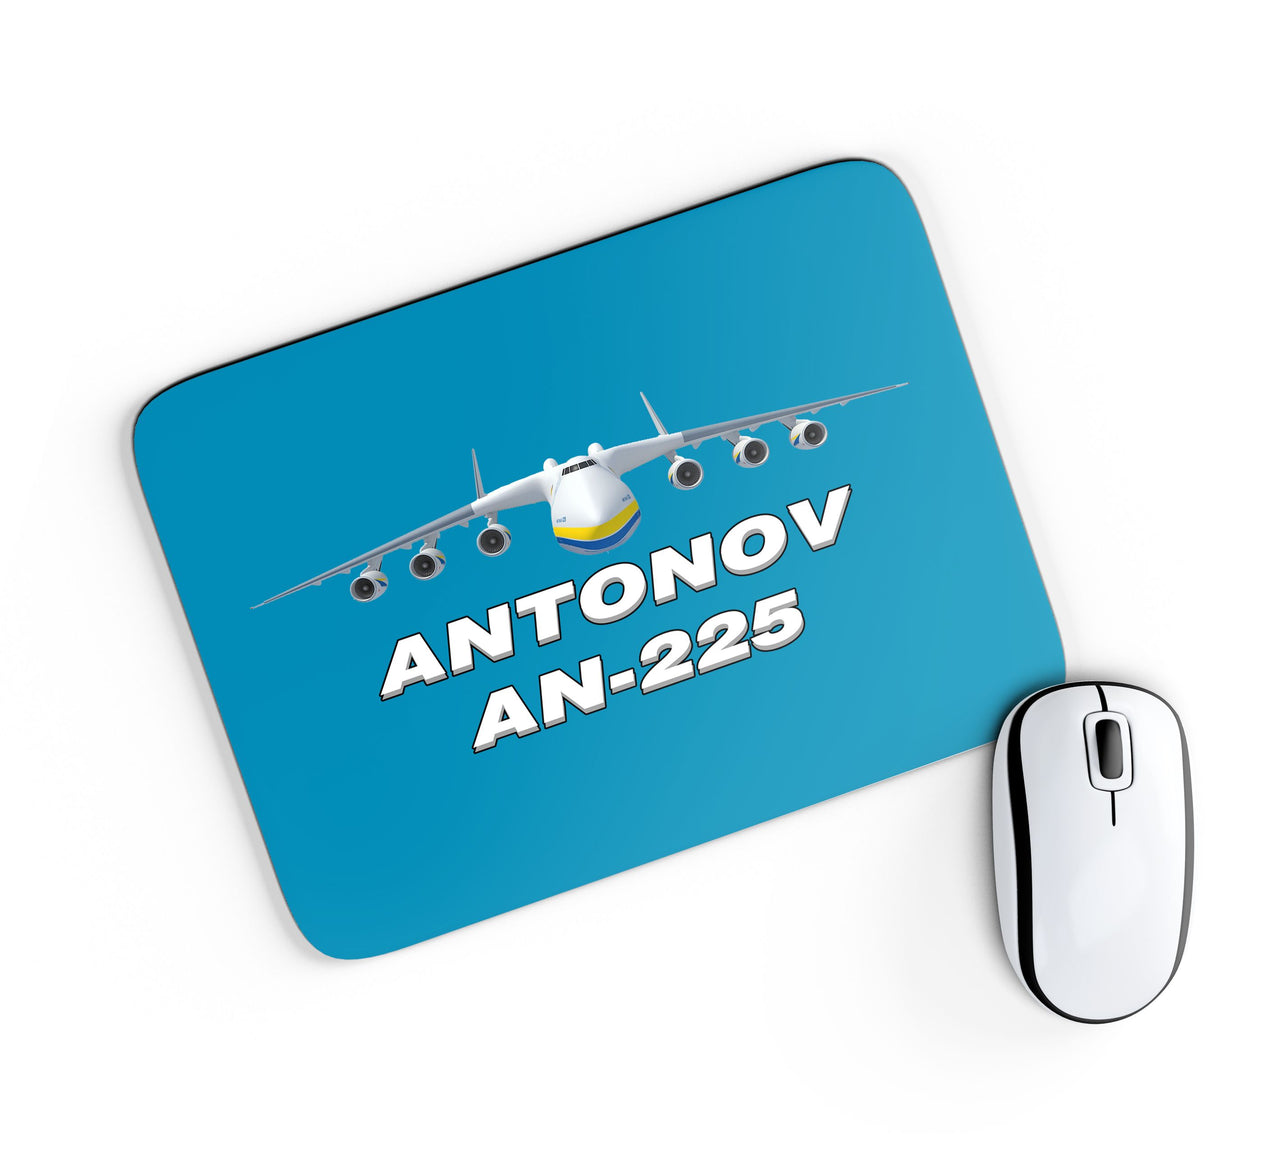 Antonov AN-225 (16) Designed Mouse Pads